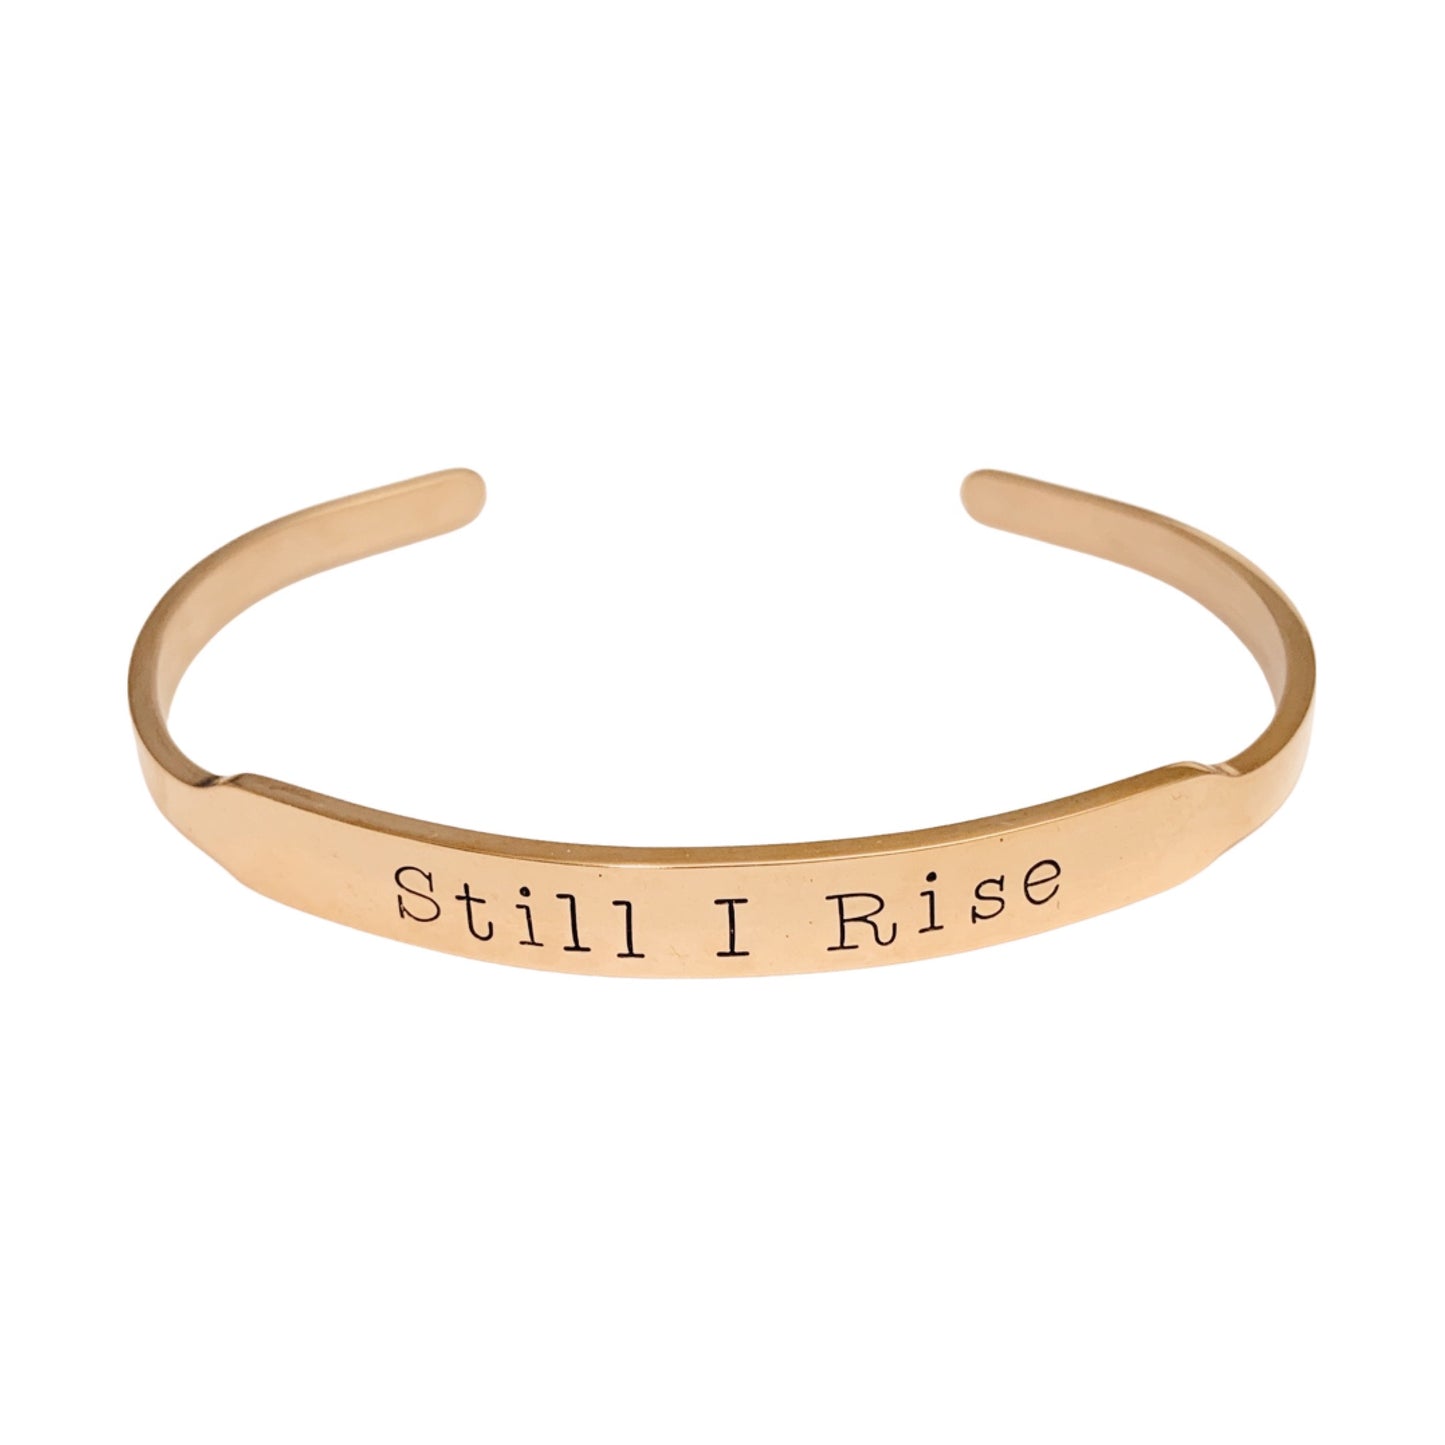 Still I Rise - Banner Cuff Bracelet